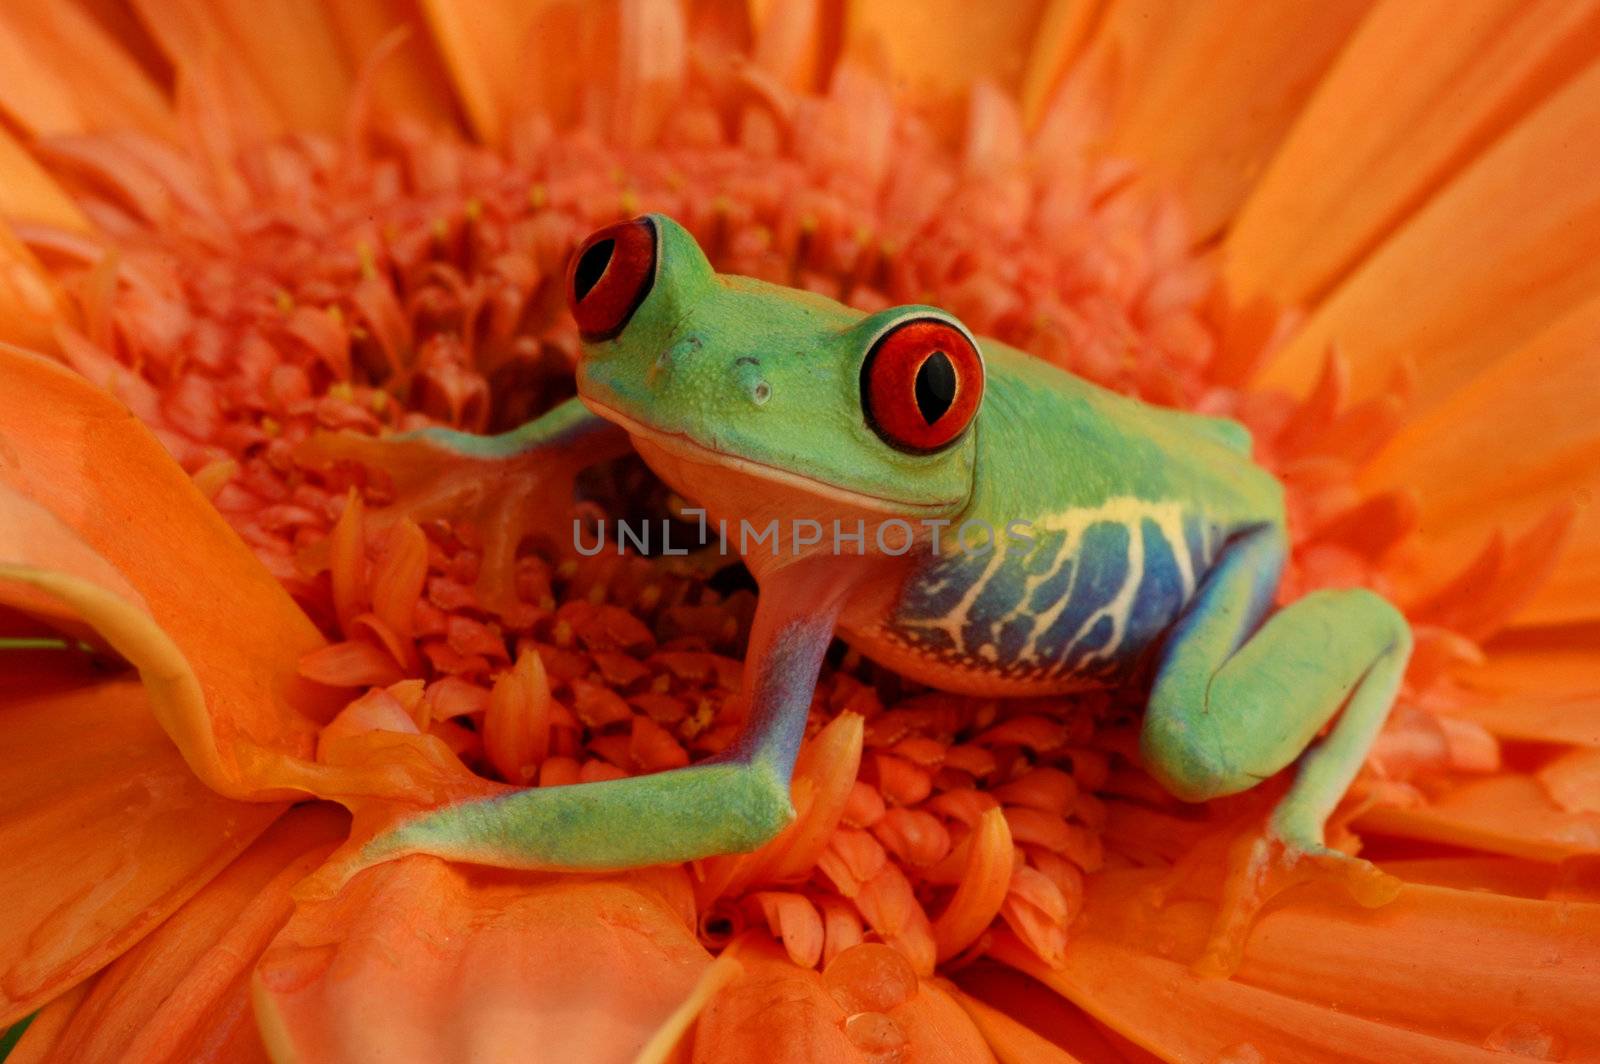 Red-eyed tree frog (Agalychnis callidryas) on a flower